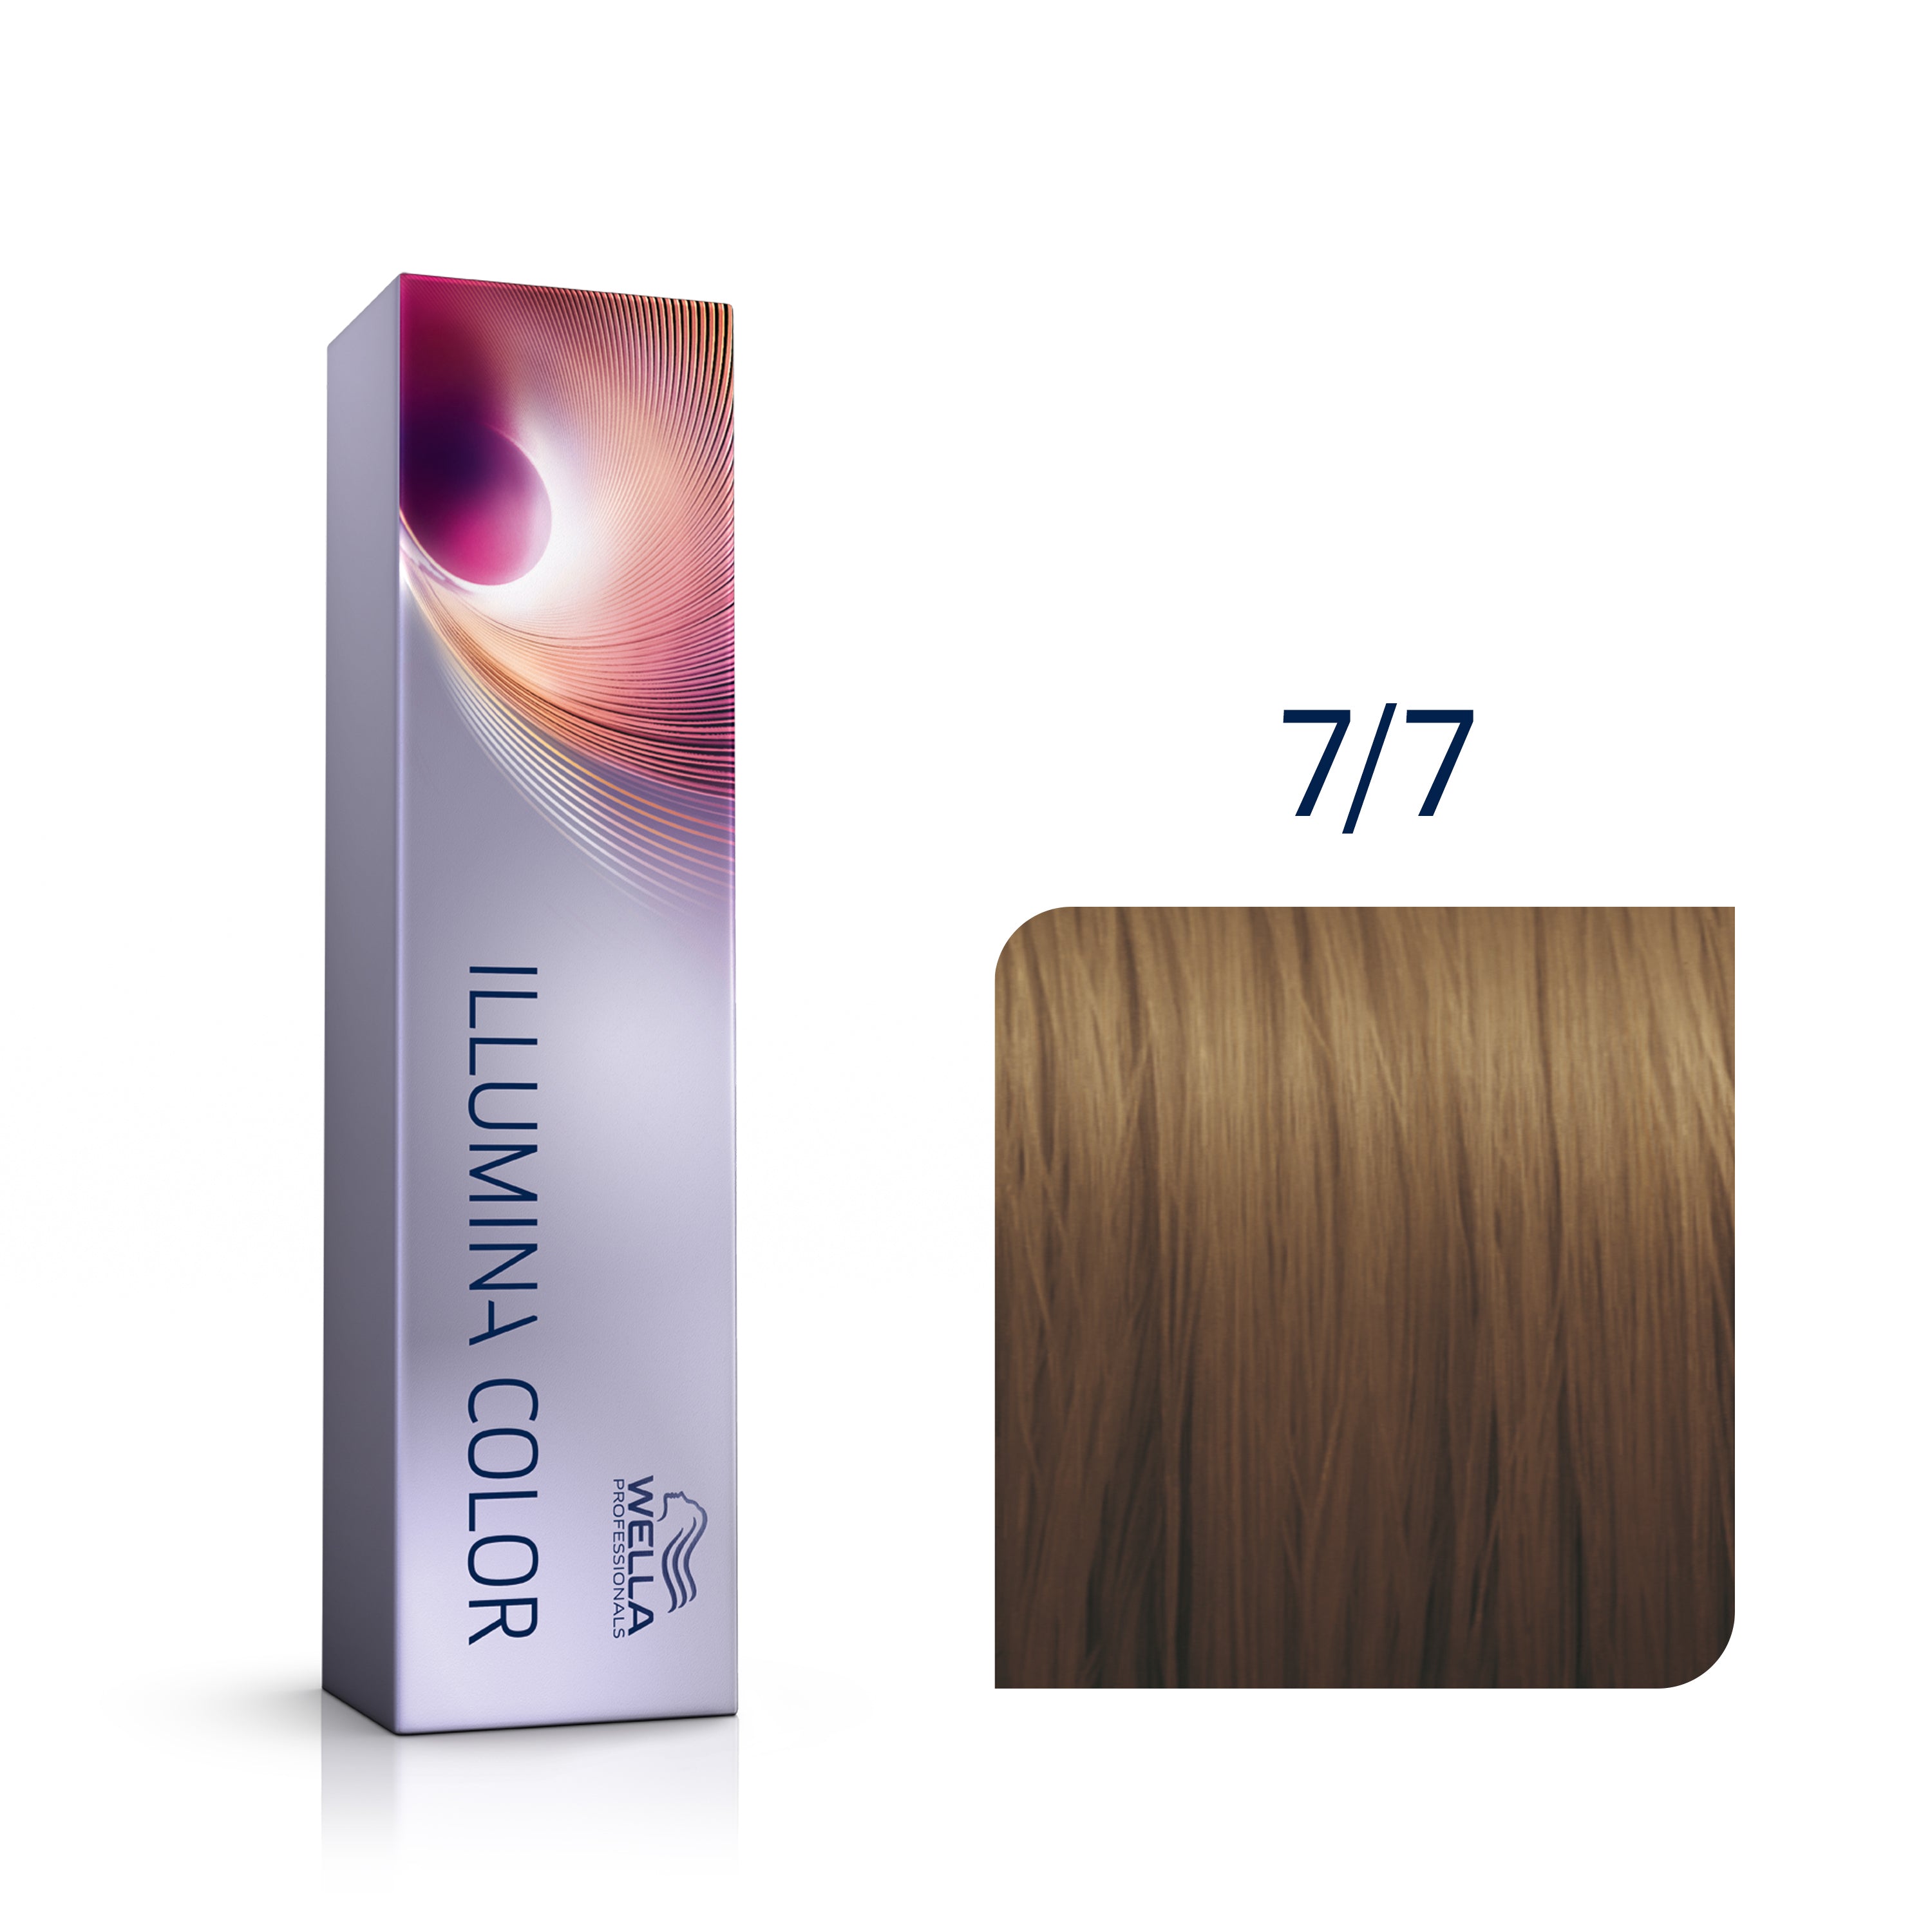 Wella Professional Illumina 7/7 medium blonde / brown 60 ml